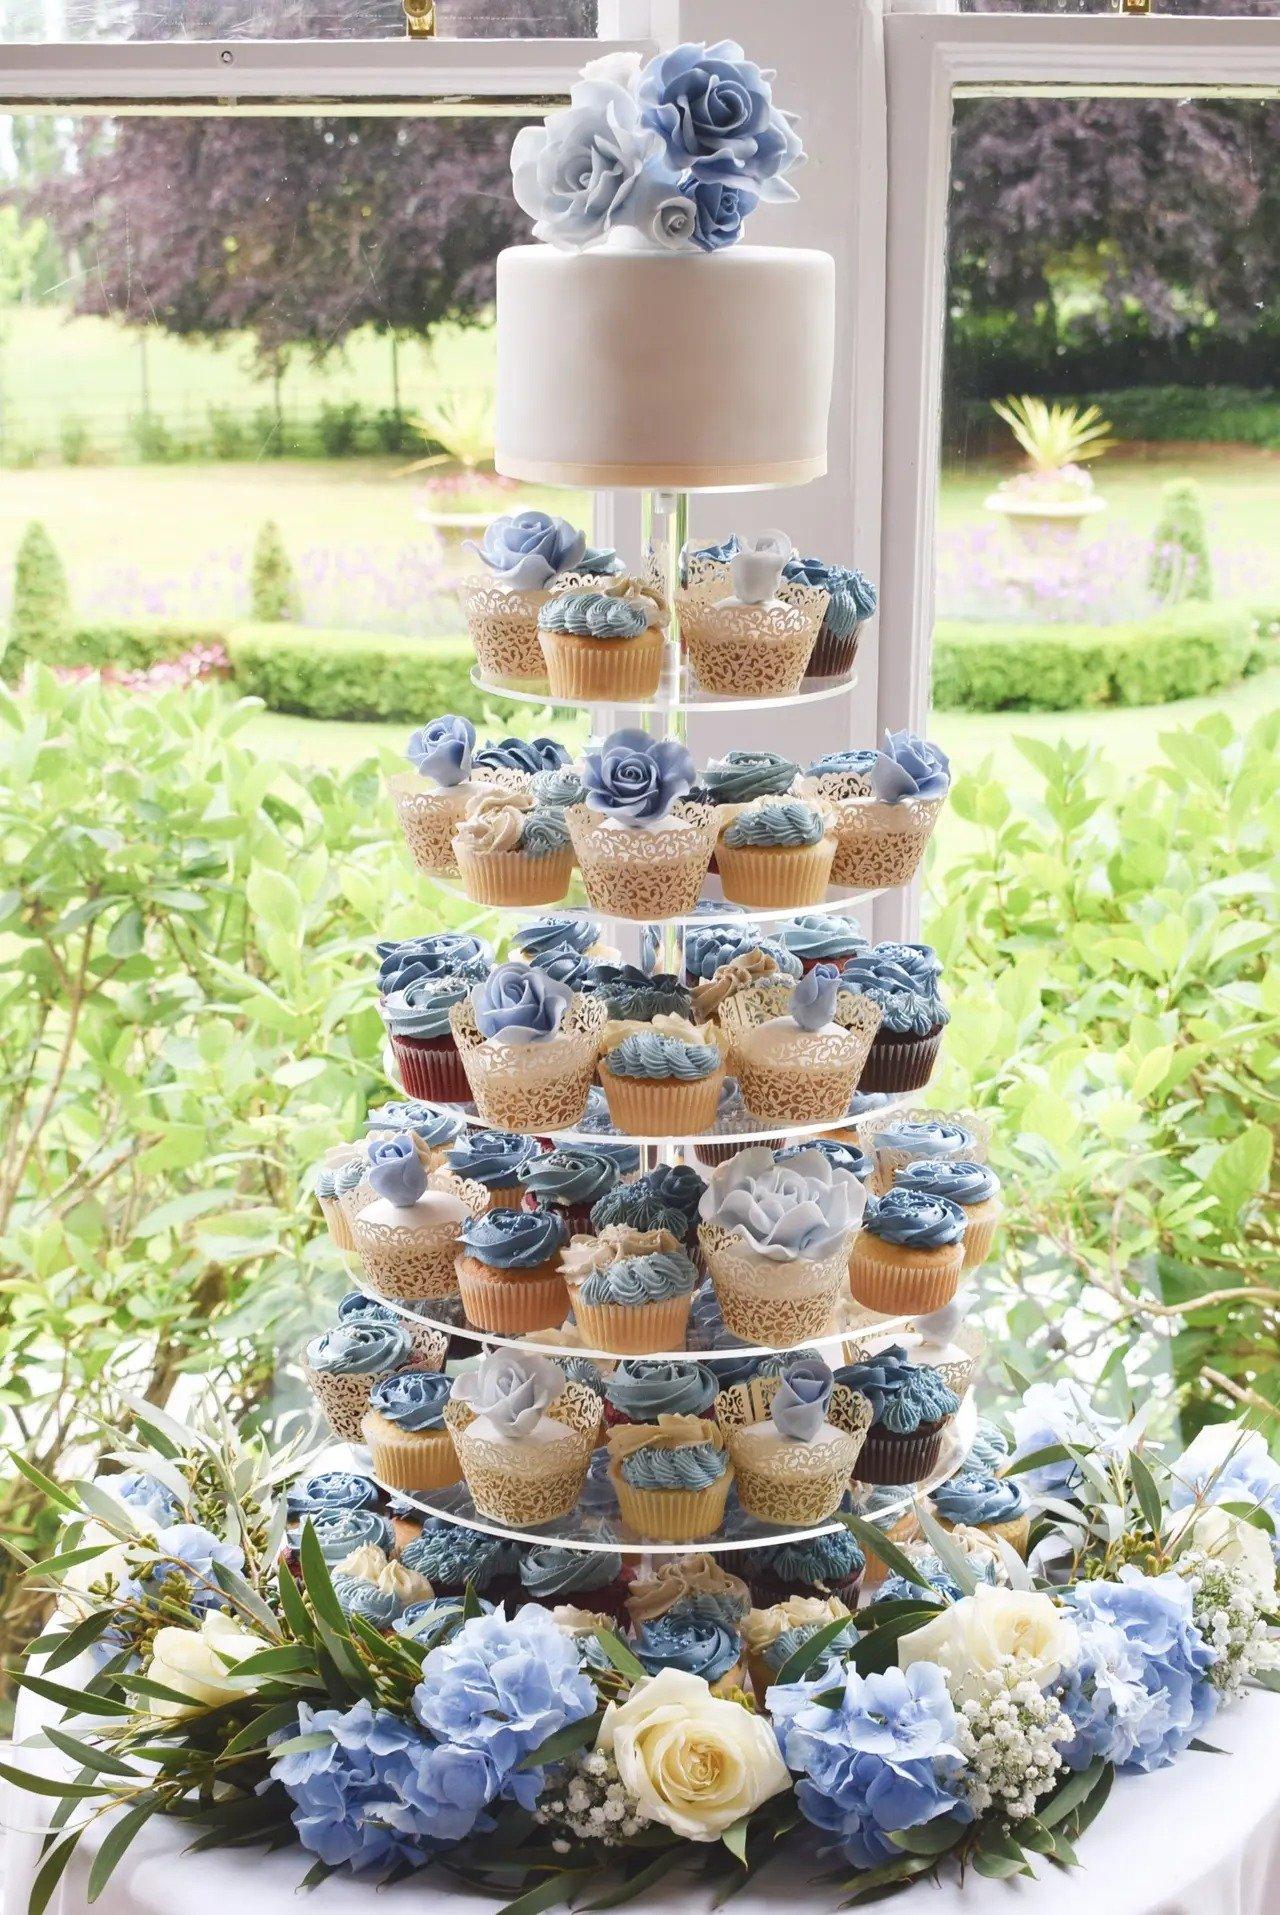 Royal blue wedding cake and cupcakes | Wedding cakes with cupcakes, Blue  wedding cupcakes, Royal blue wedding cakes